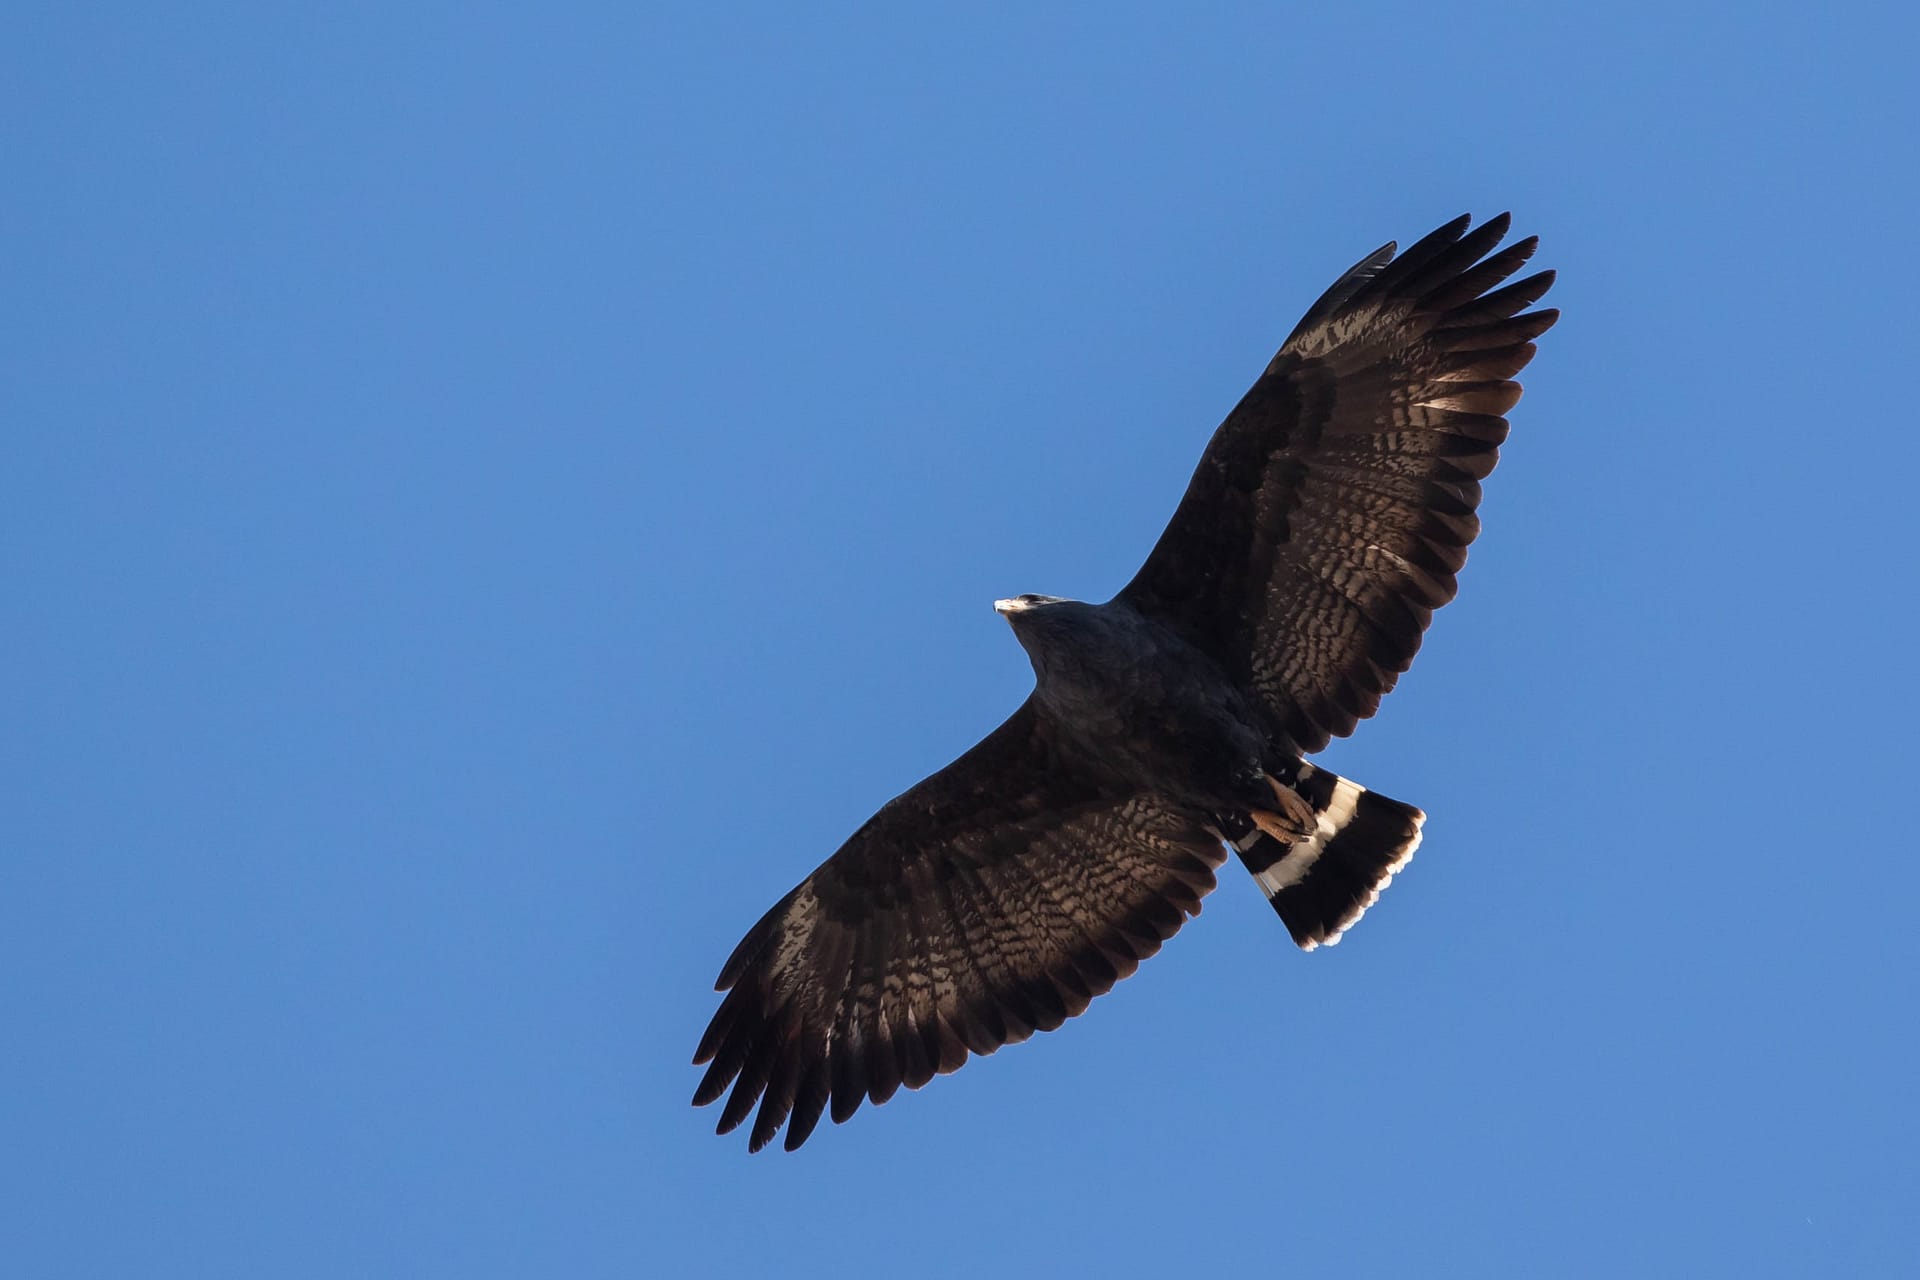 Common Black Hawk  Audubon Field Guide